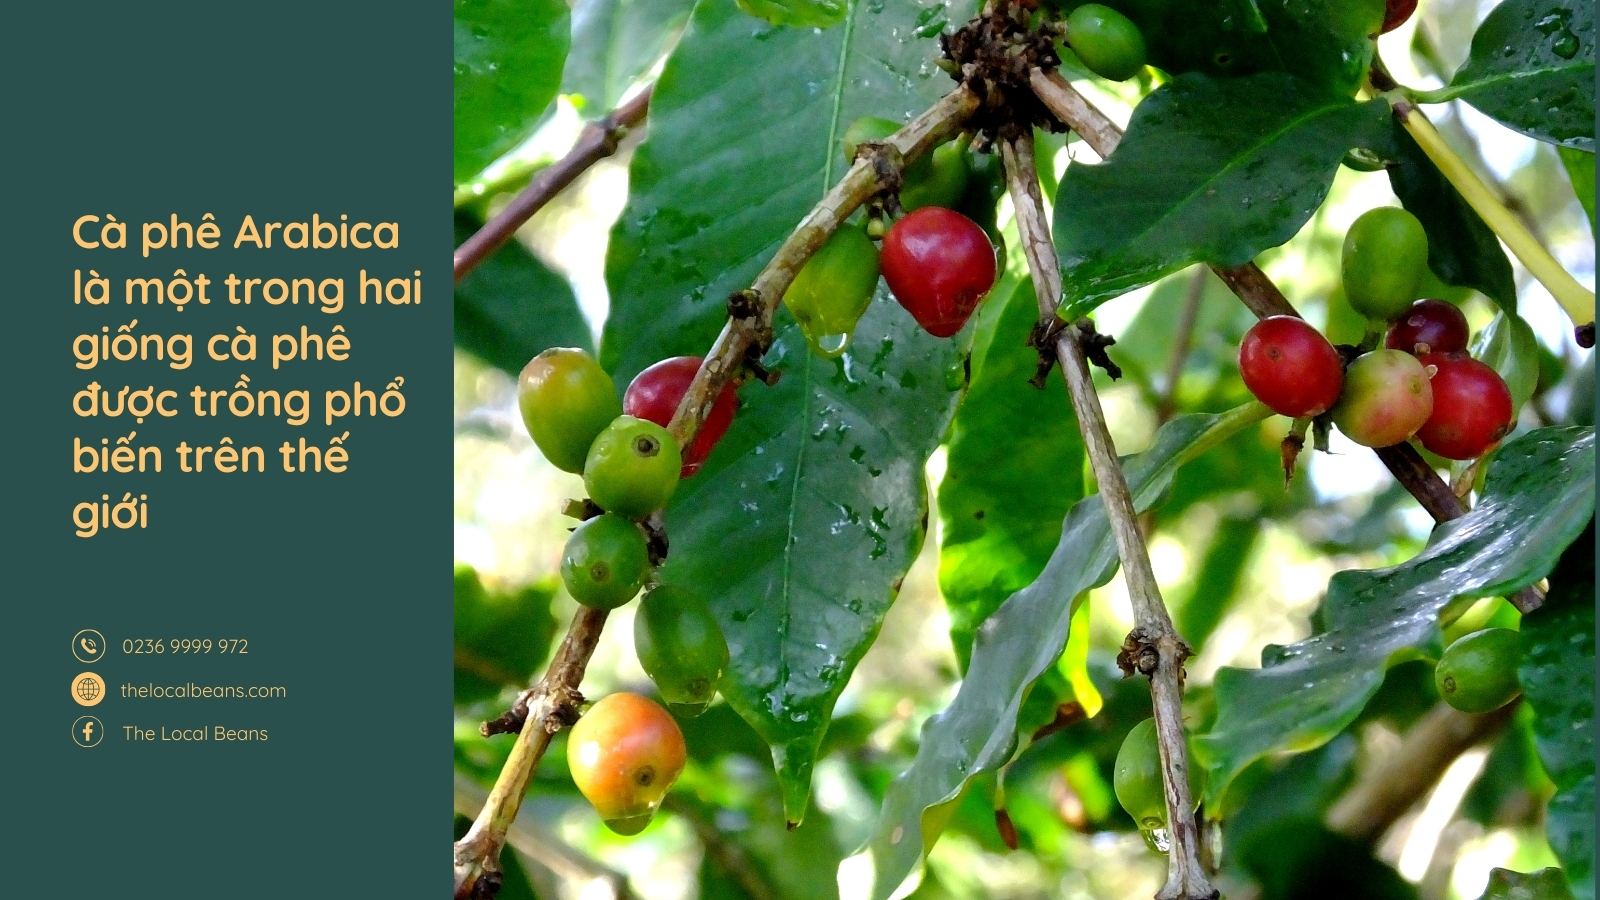 cây cà phê arabica đỏ mọng